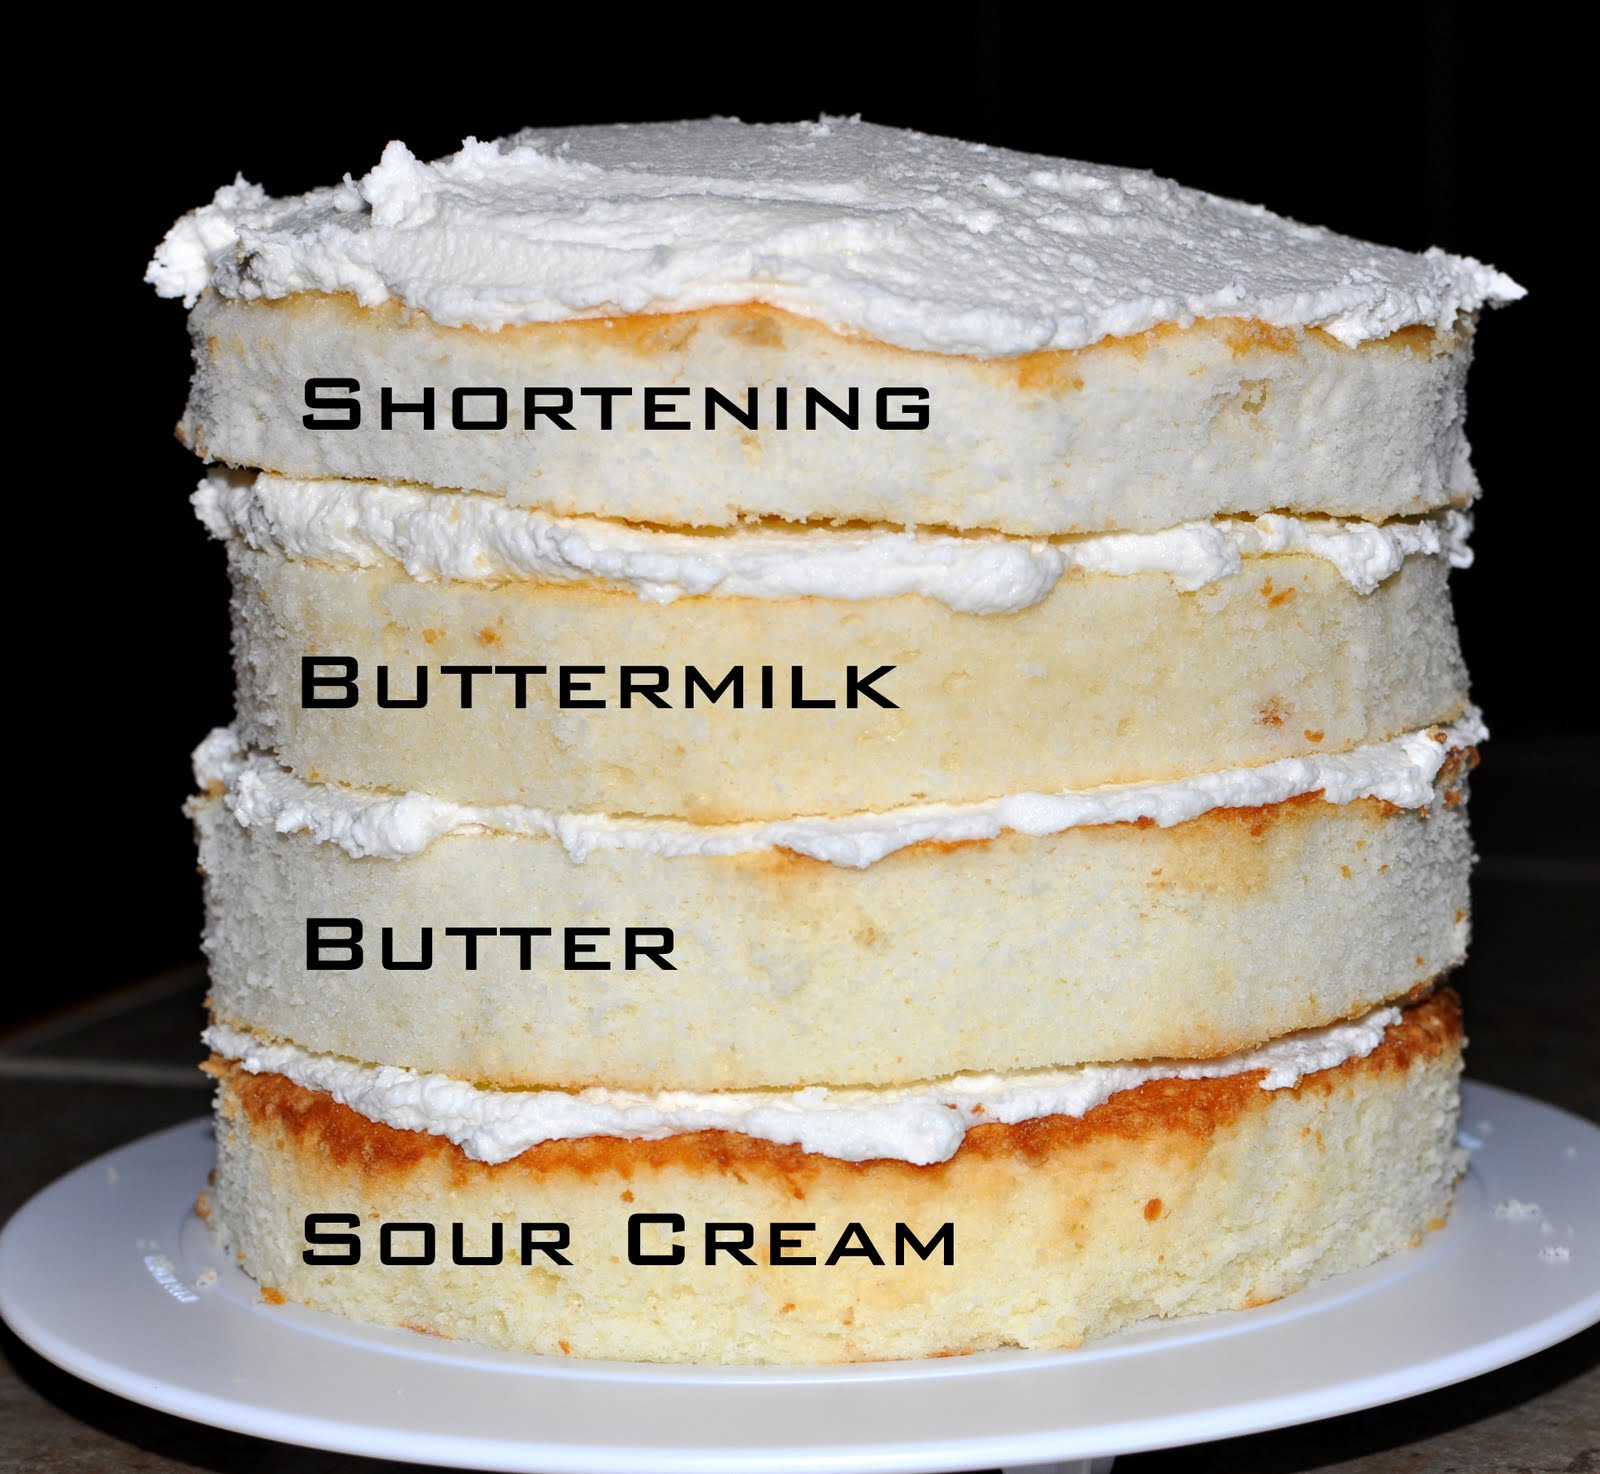 White Wedding Cake Recipe From Scratch
 The Bake More White Cake Taste Test